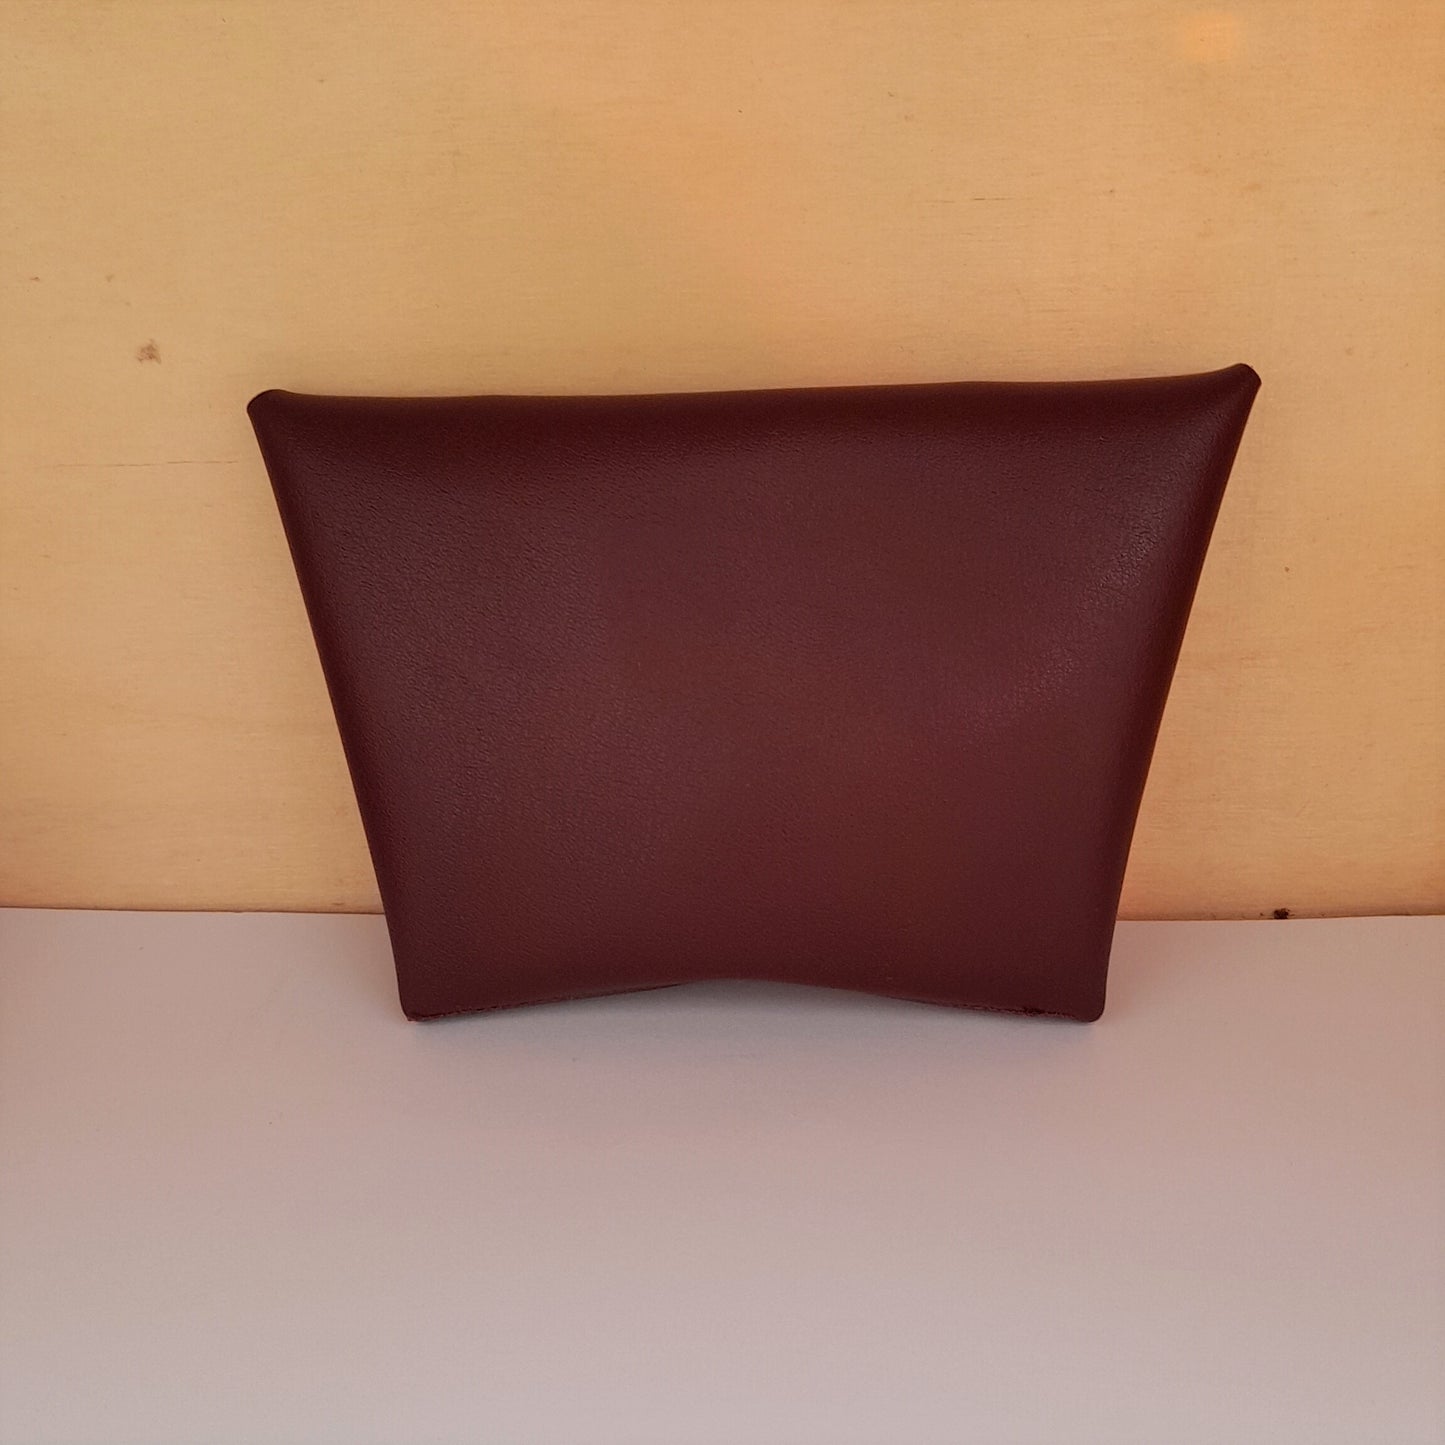 Porte-monnaie origami en alter-cuir de raisin